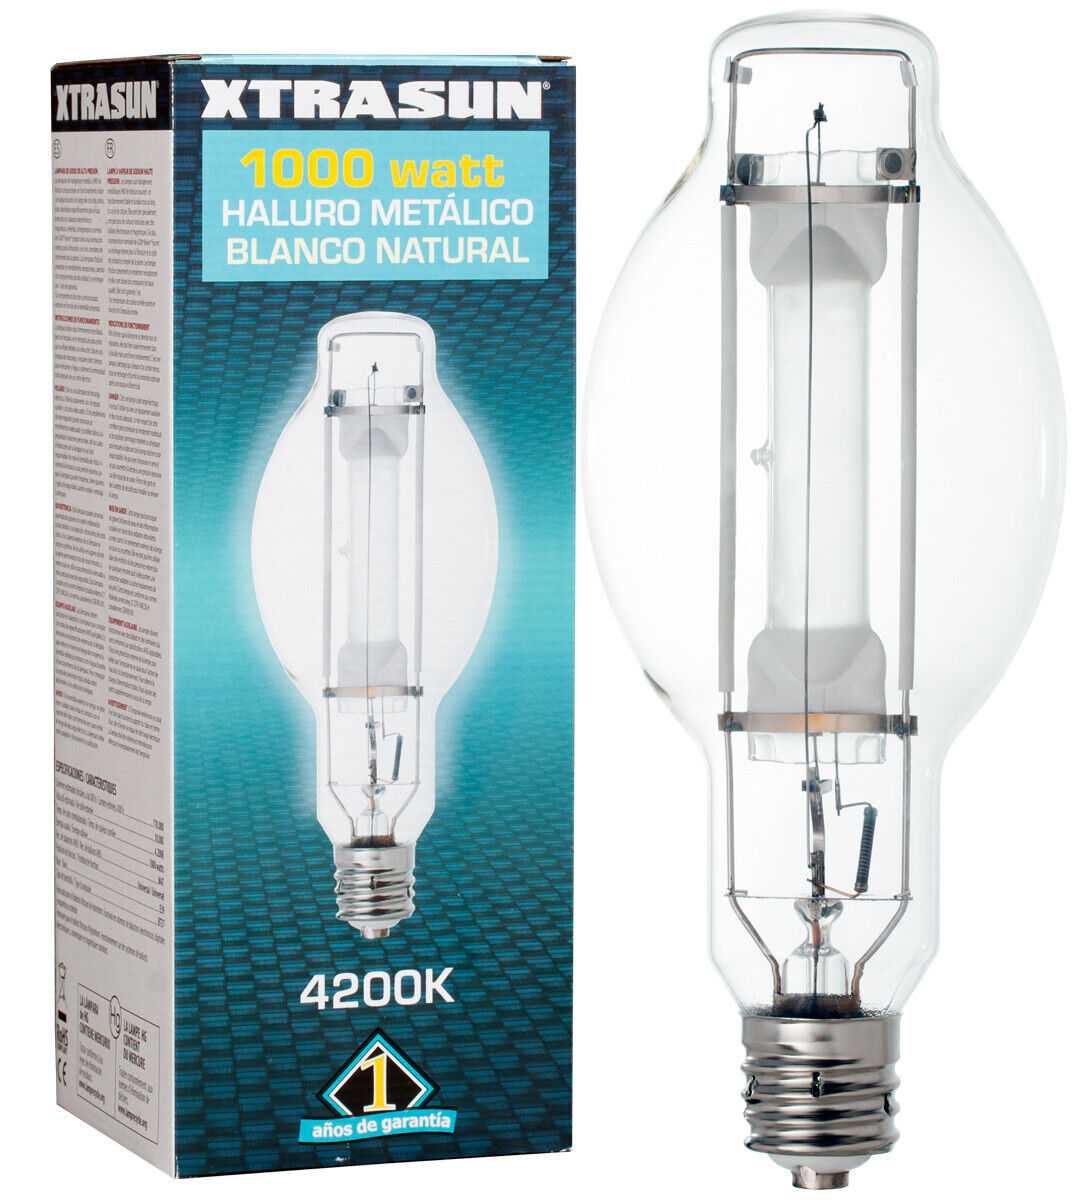 Xtrasun Metal Halide (MH) Lamp, 1000W, 4200K